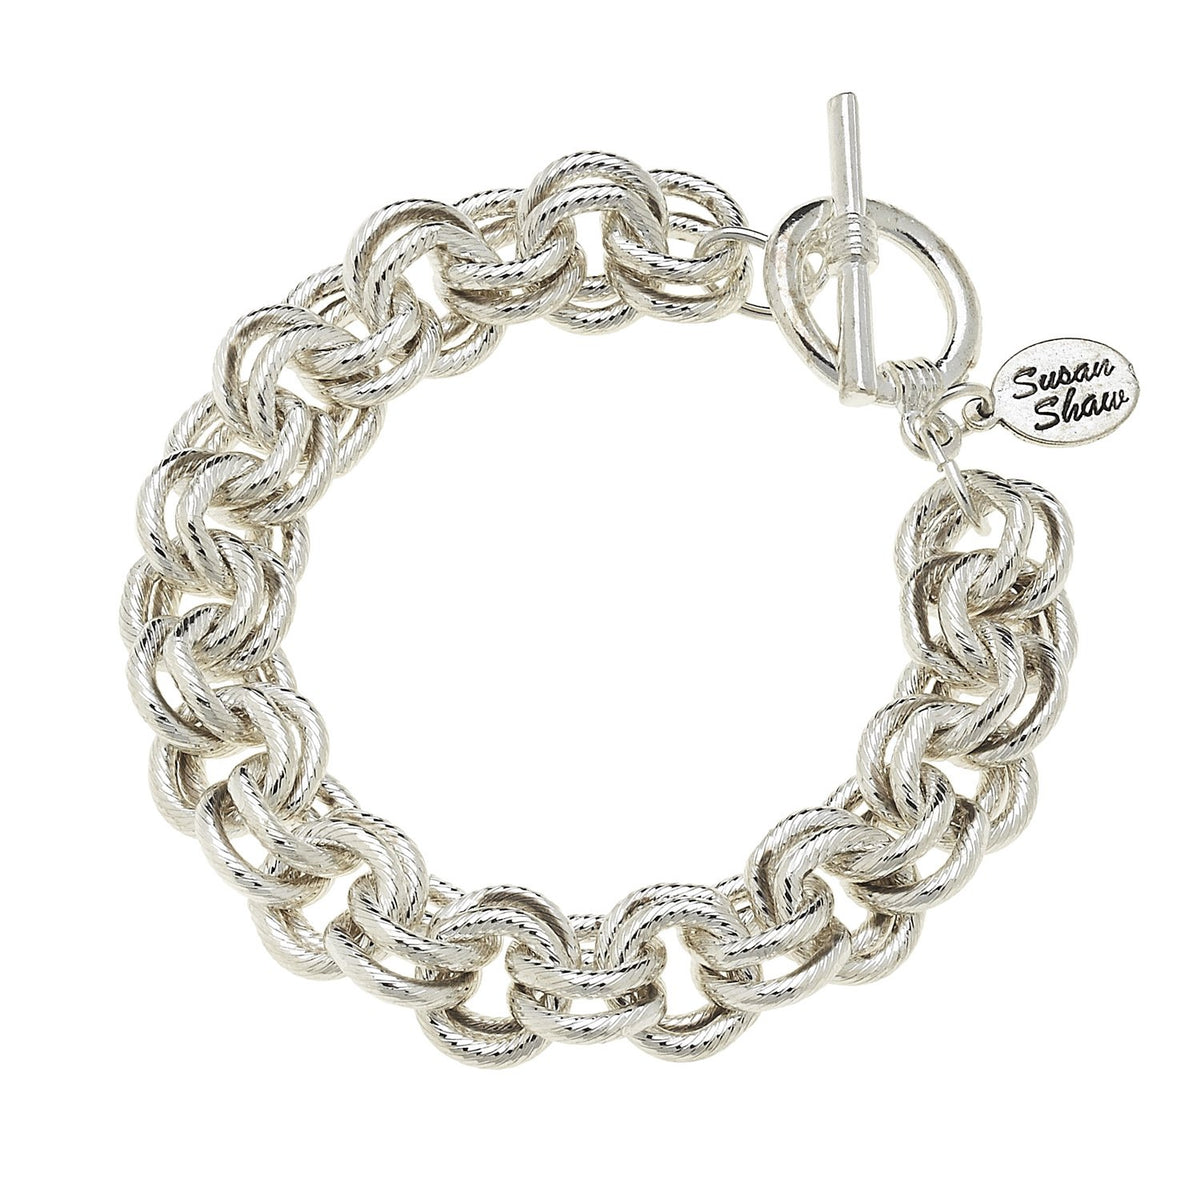 Susan Shaw Double Linked Chain Bracelet